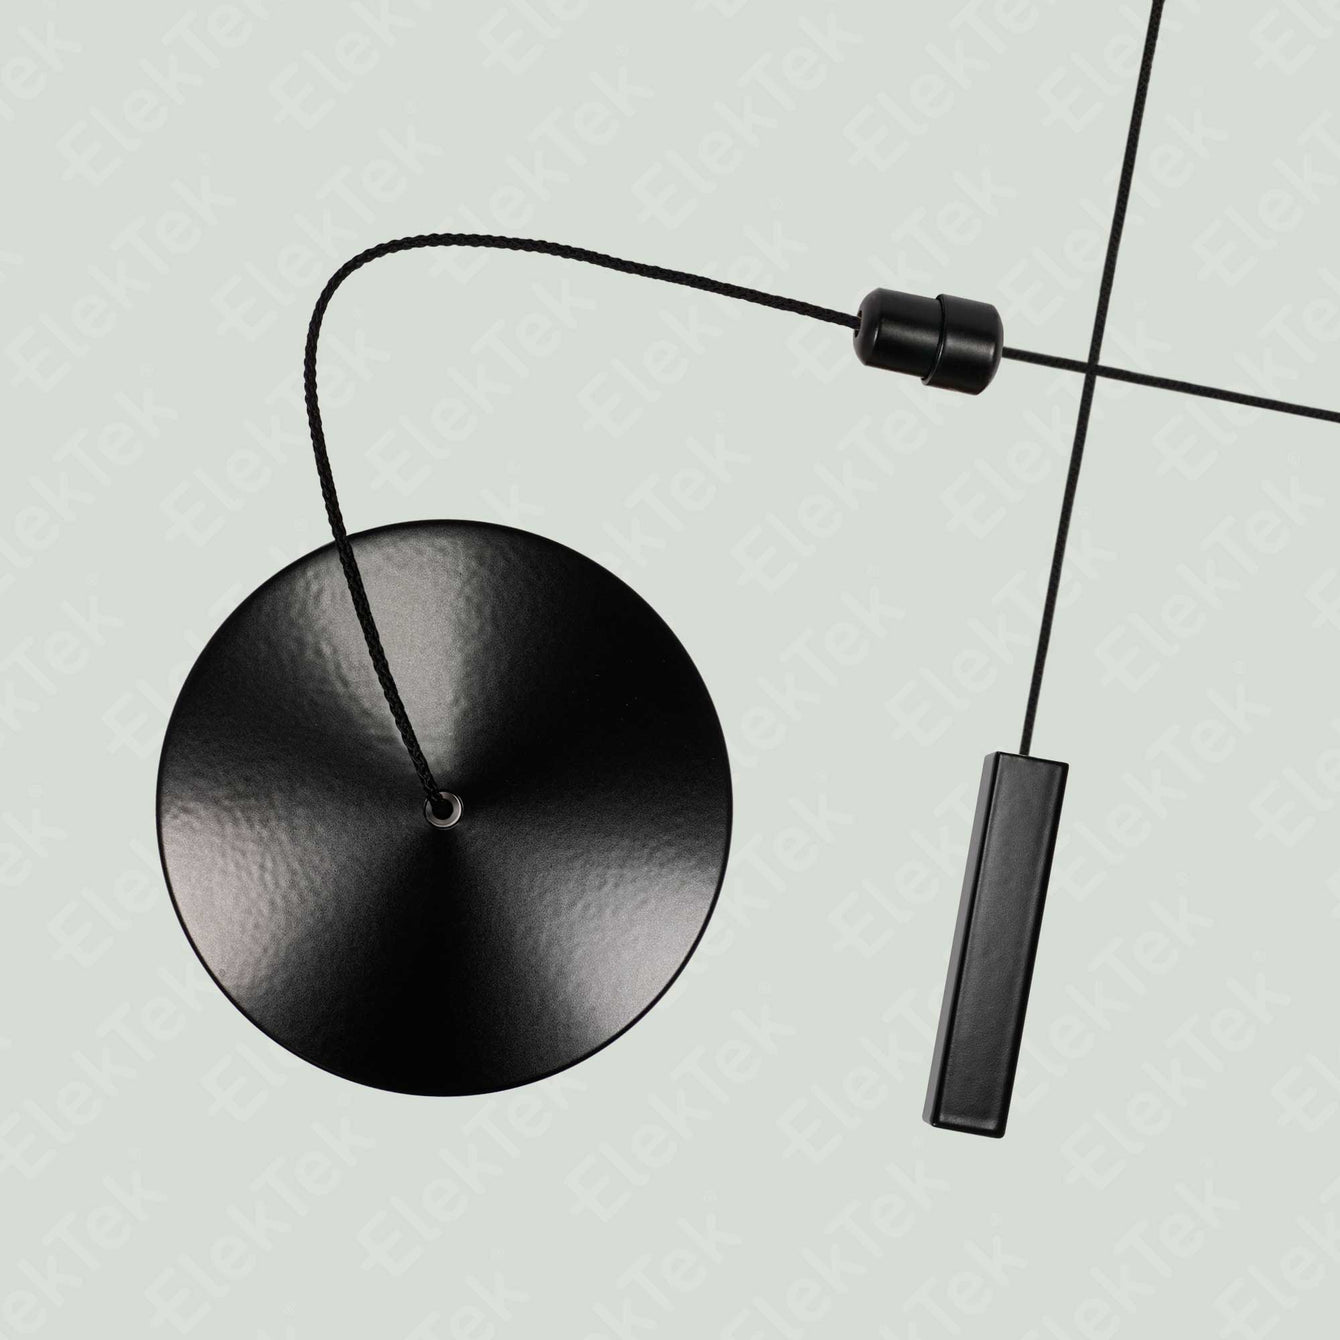 ElekTek Premium Black Bathroom Light Pull Cord Switch Kit with Pull Chain Handle 